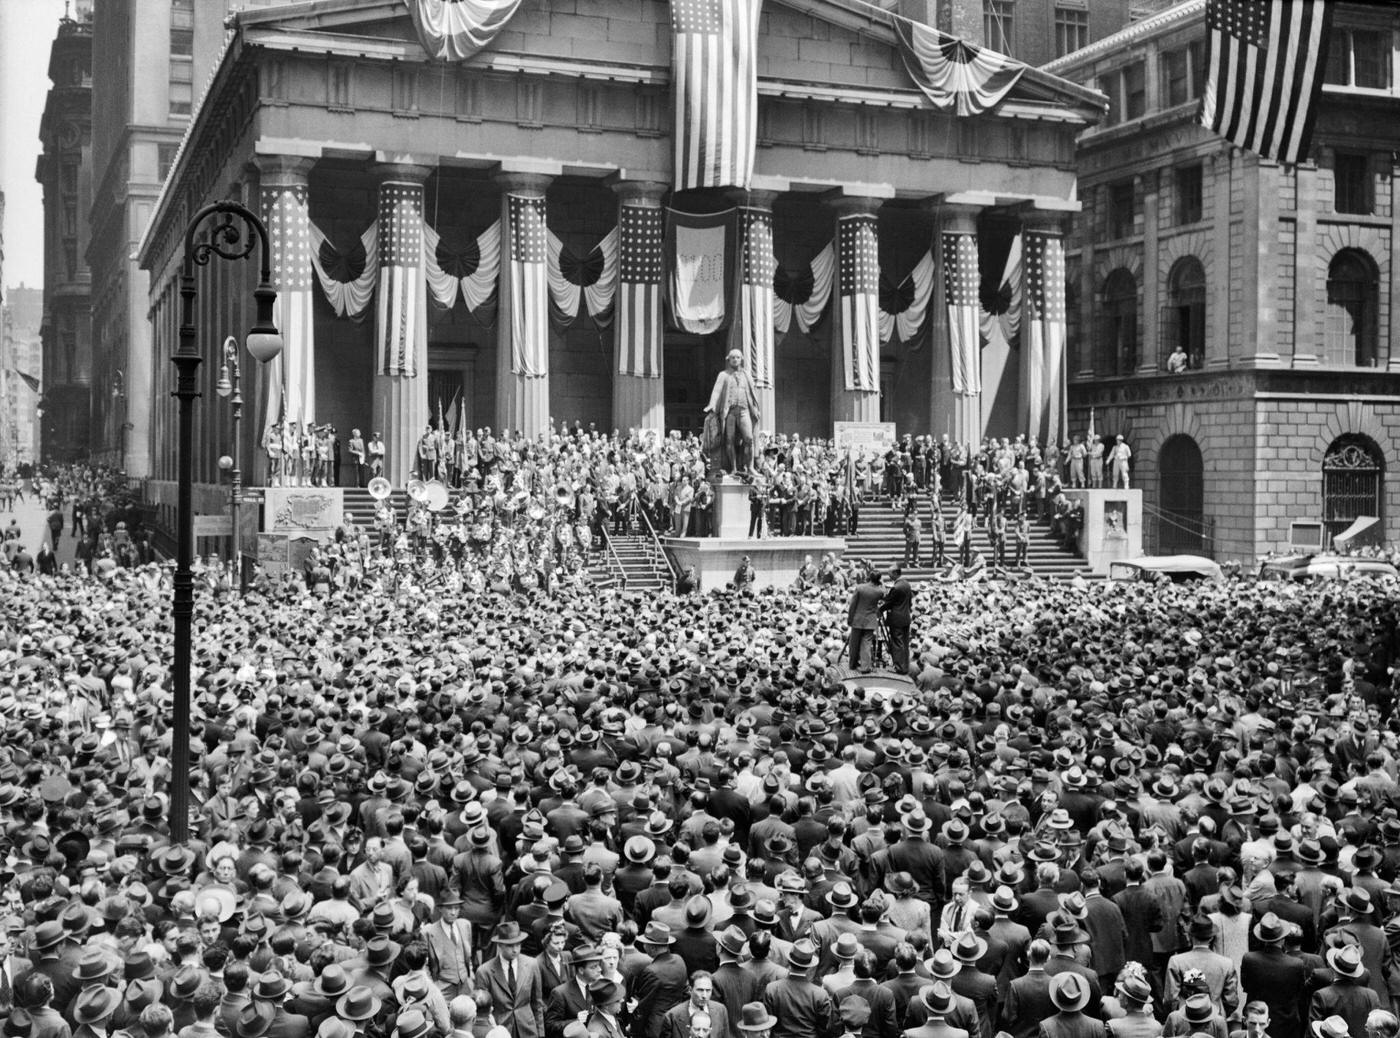 Wwii War Bond Rally, New York Stock Exchange, Wall Street, Manhattan, 1942